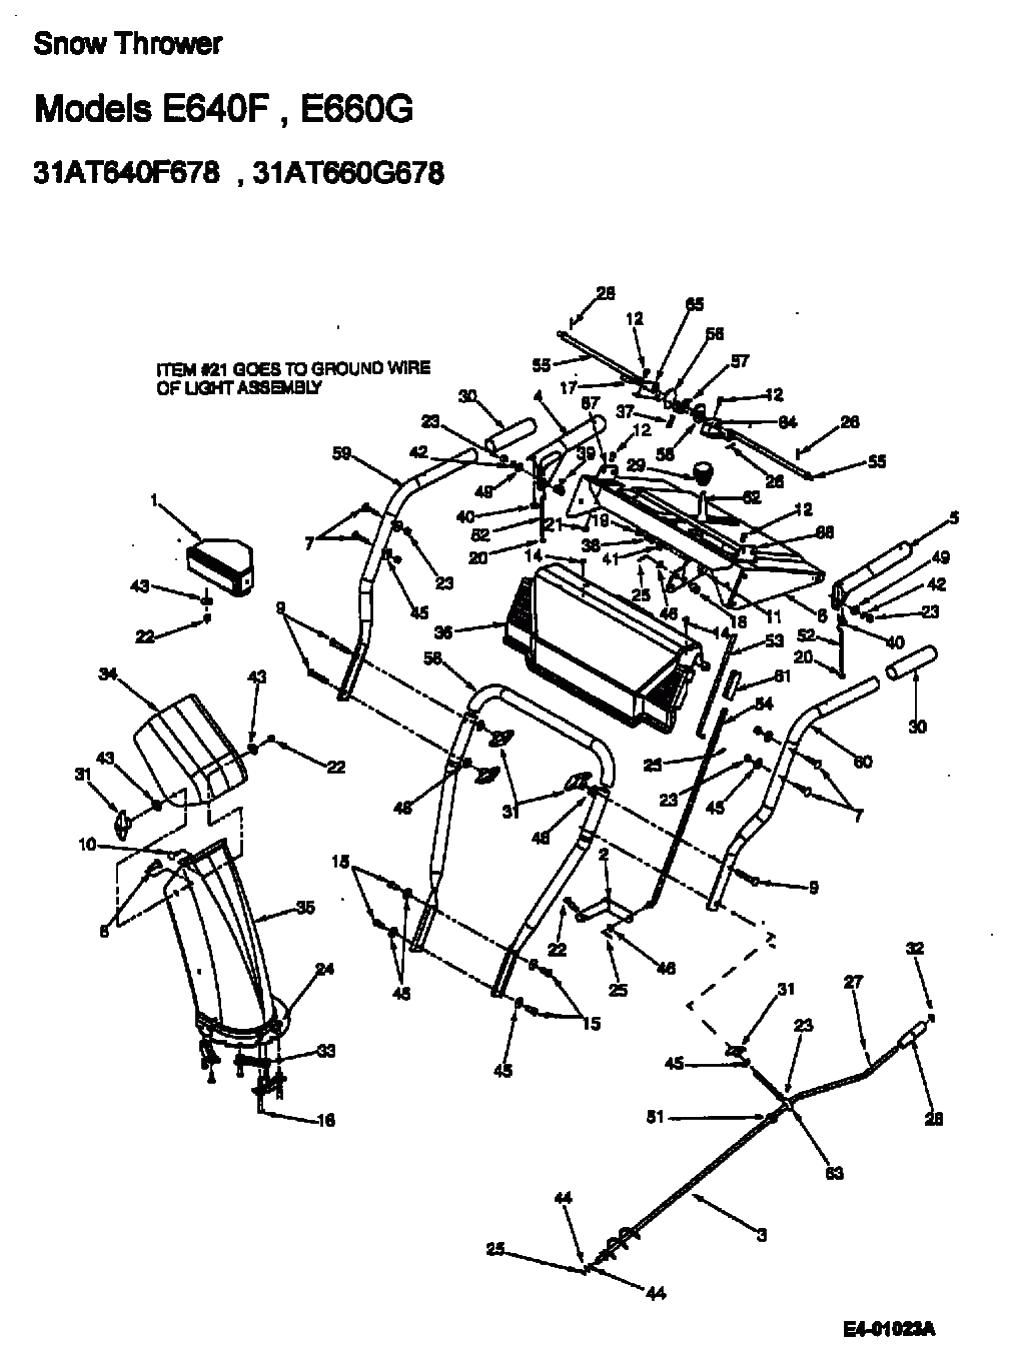 MTD Артикул 31AE660G678 (год выпуска 1999). Приборная панель, Разгрузочный желоб, ручка